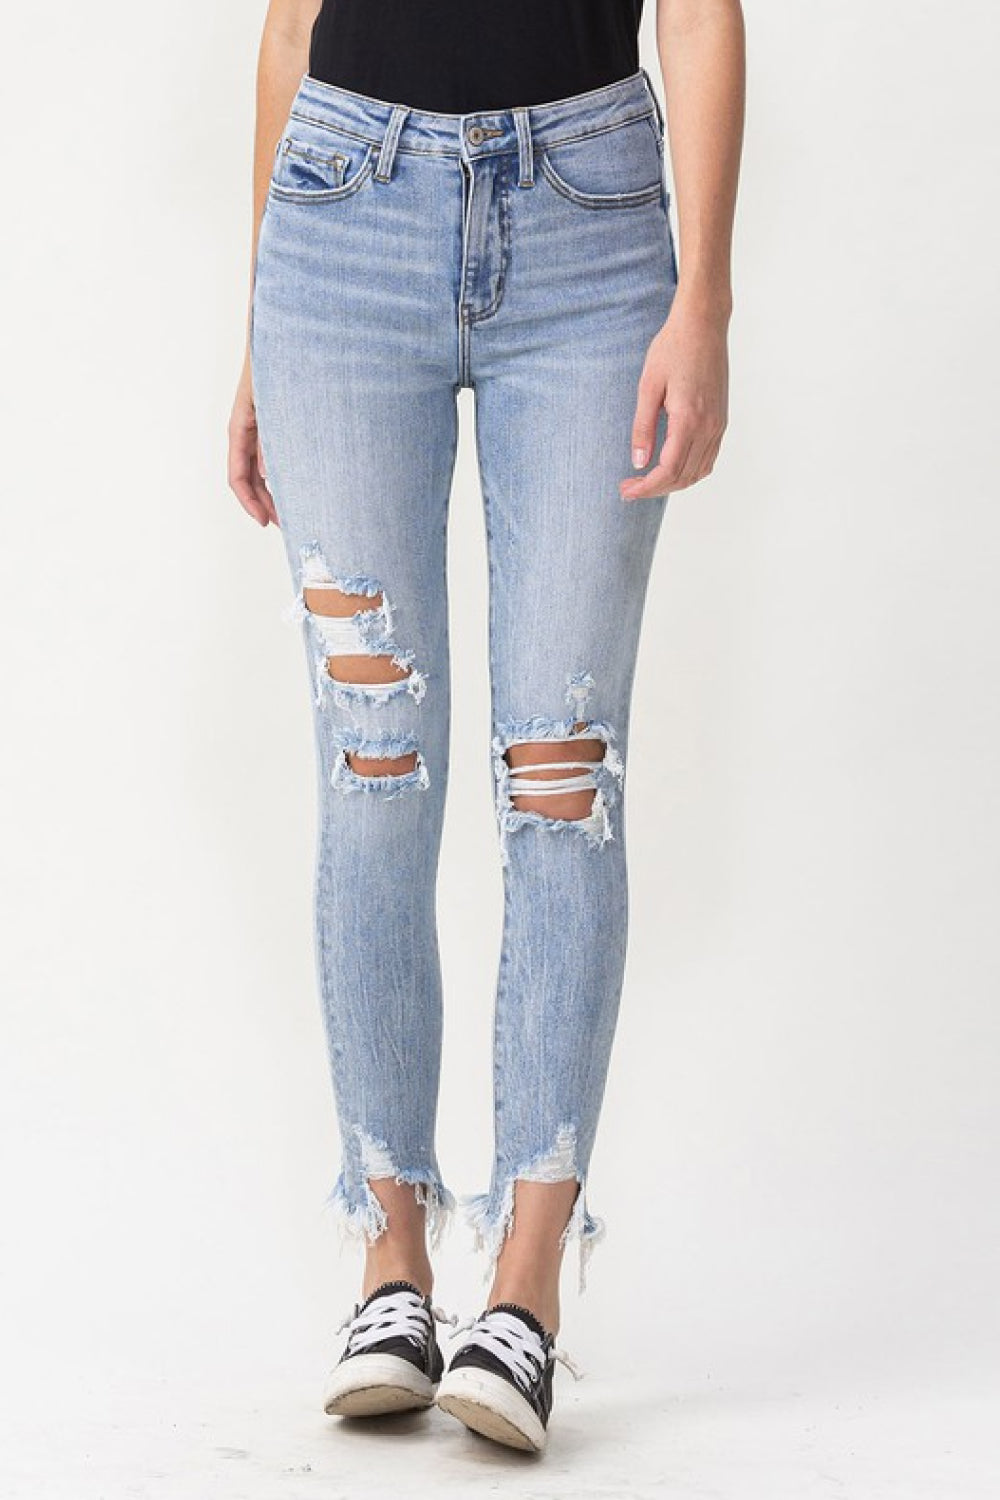 Lovervet Lauren Distressed High Rise Skinny Jeans - Online Only